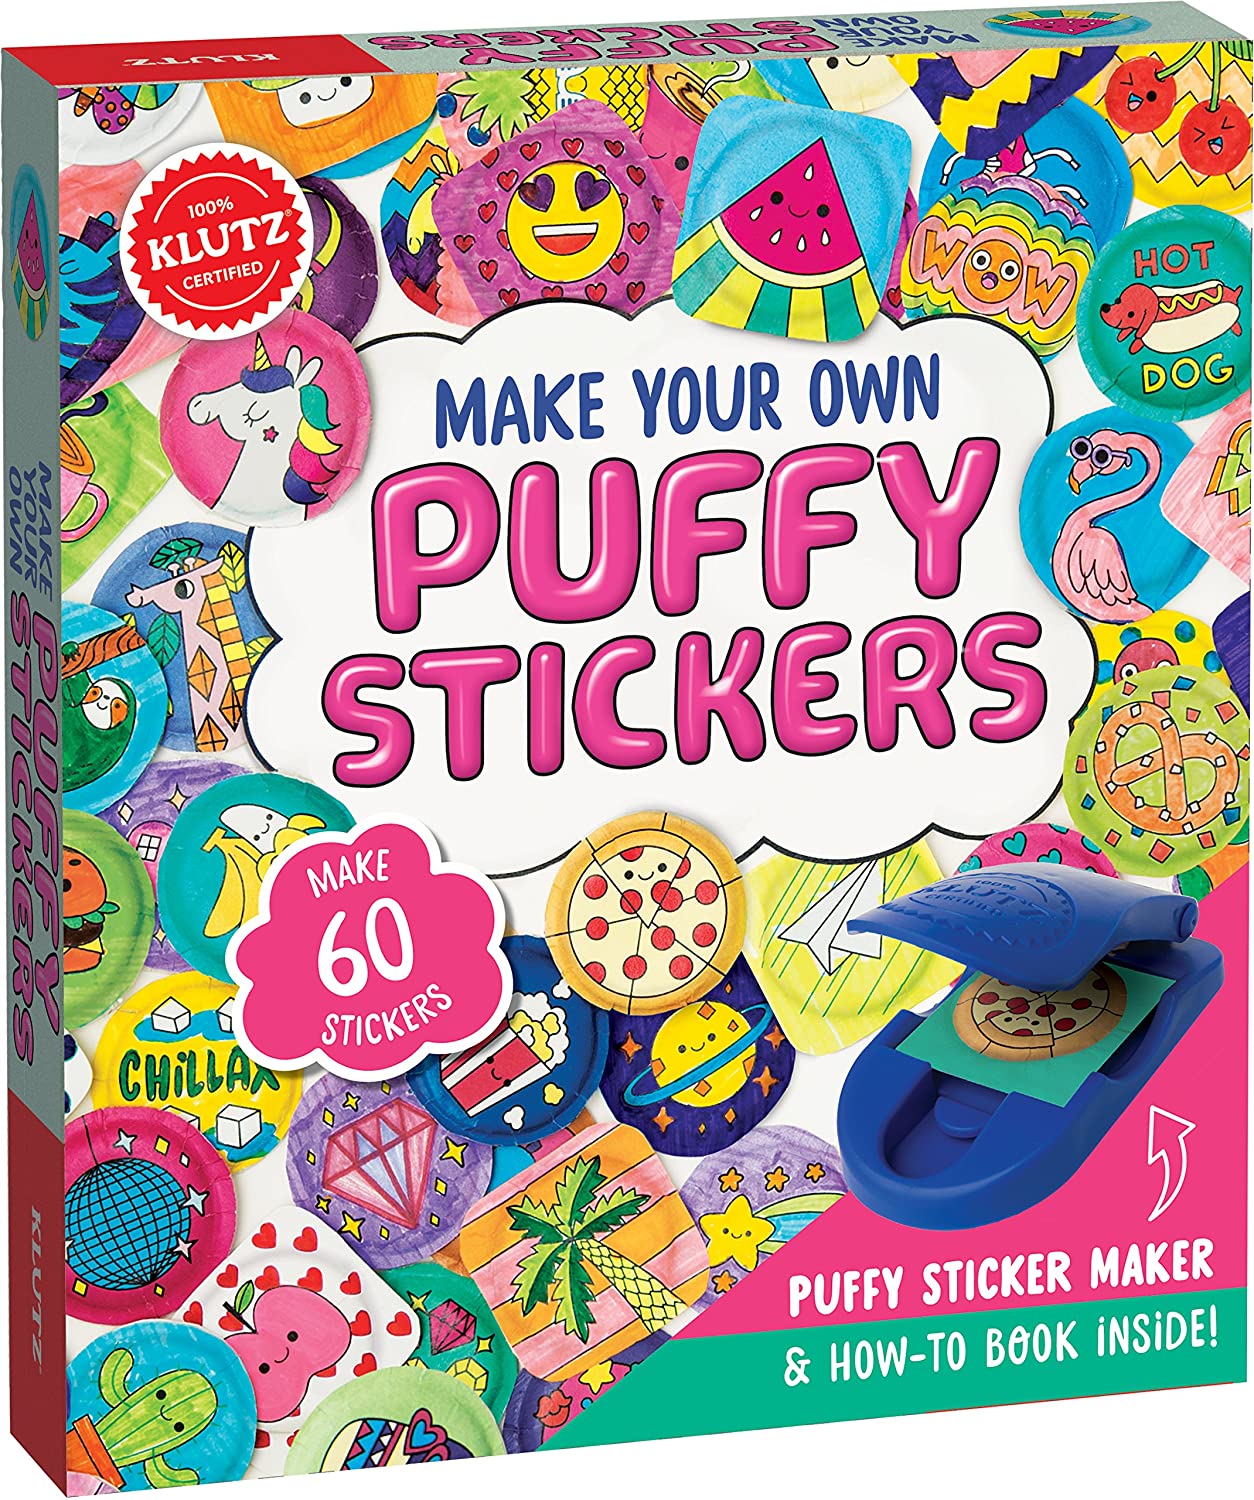 Make Puffy Stickers